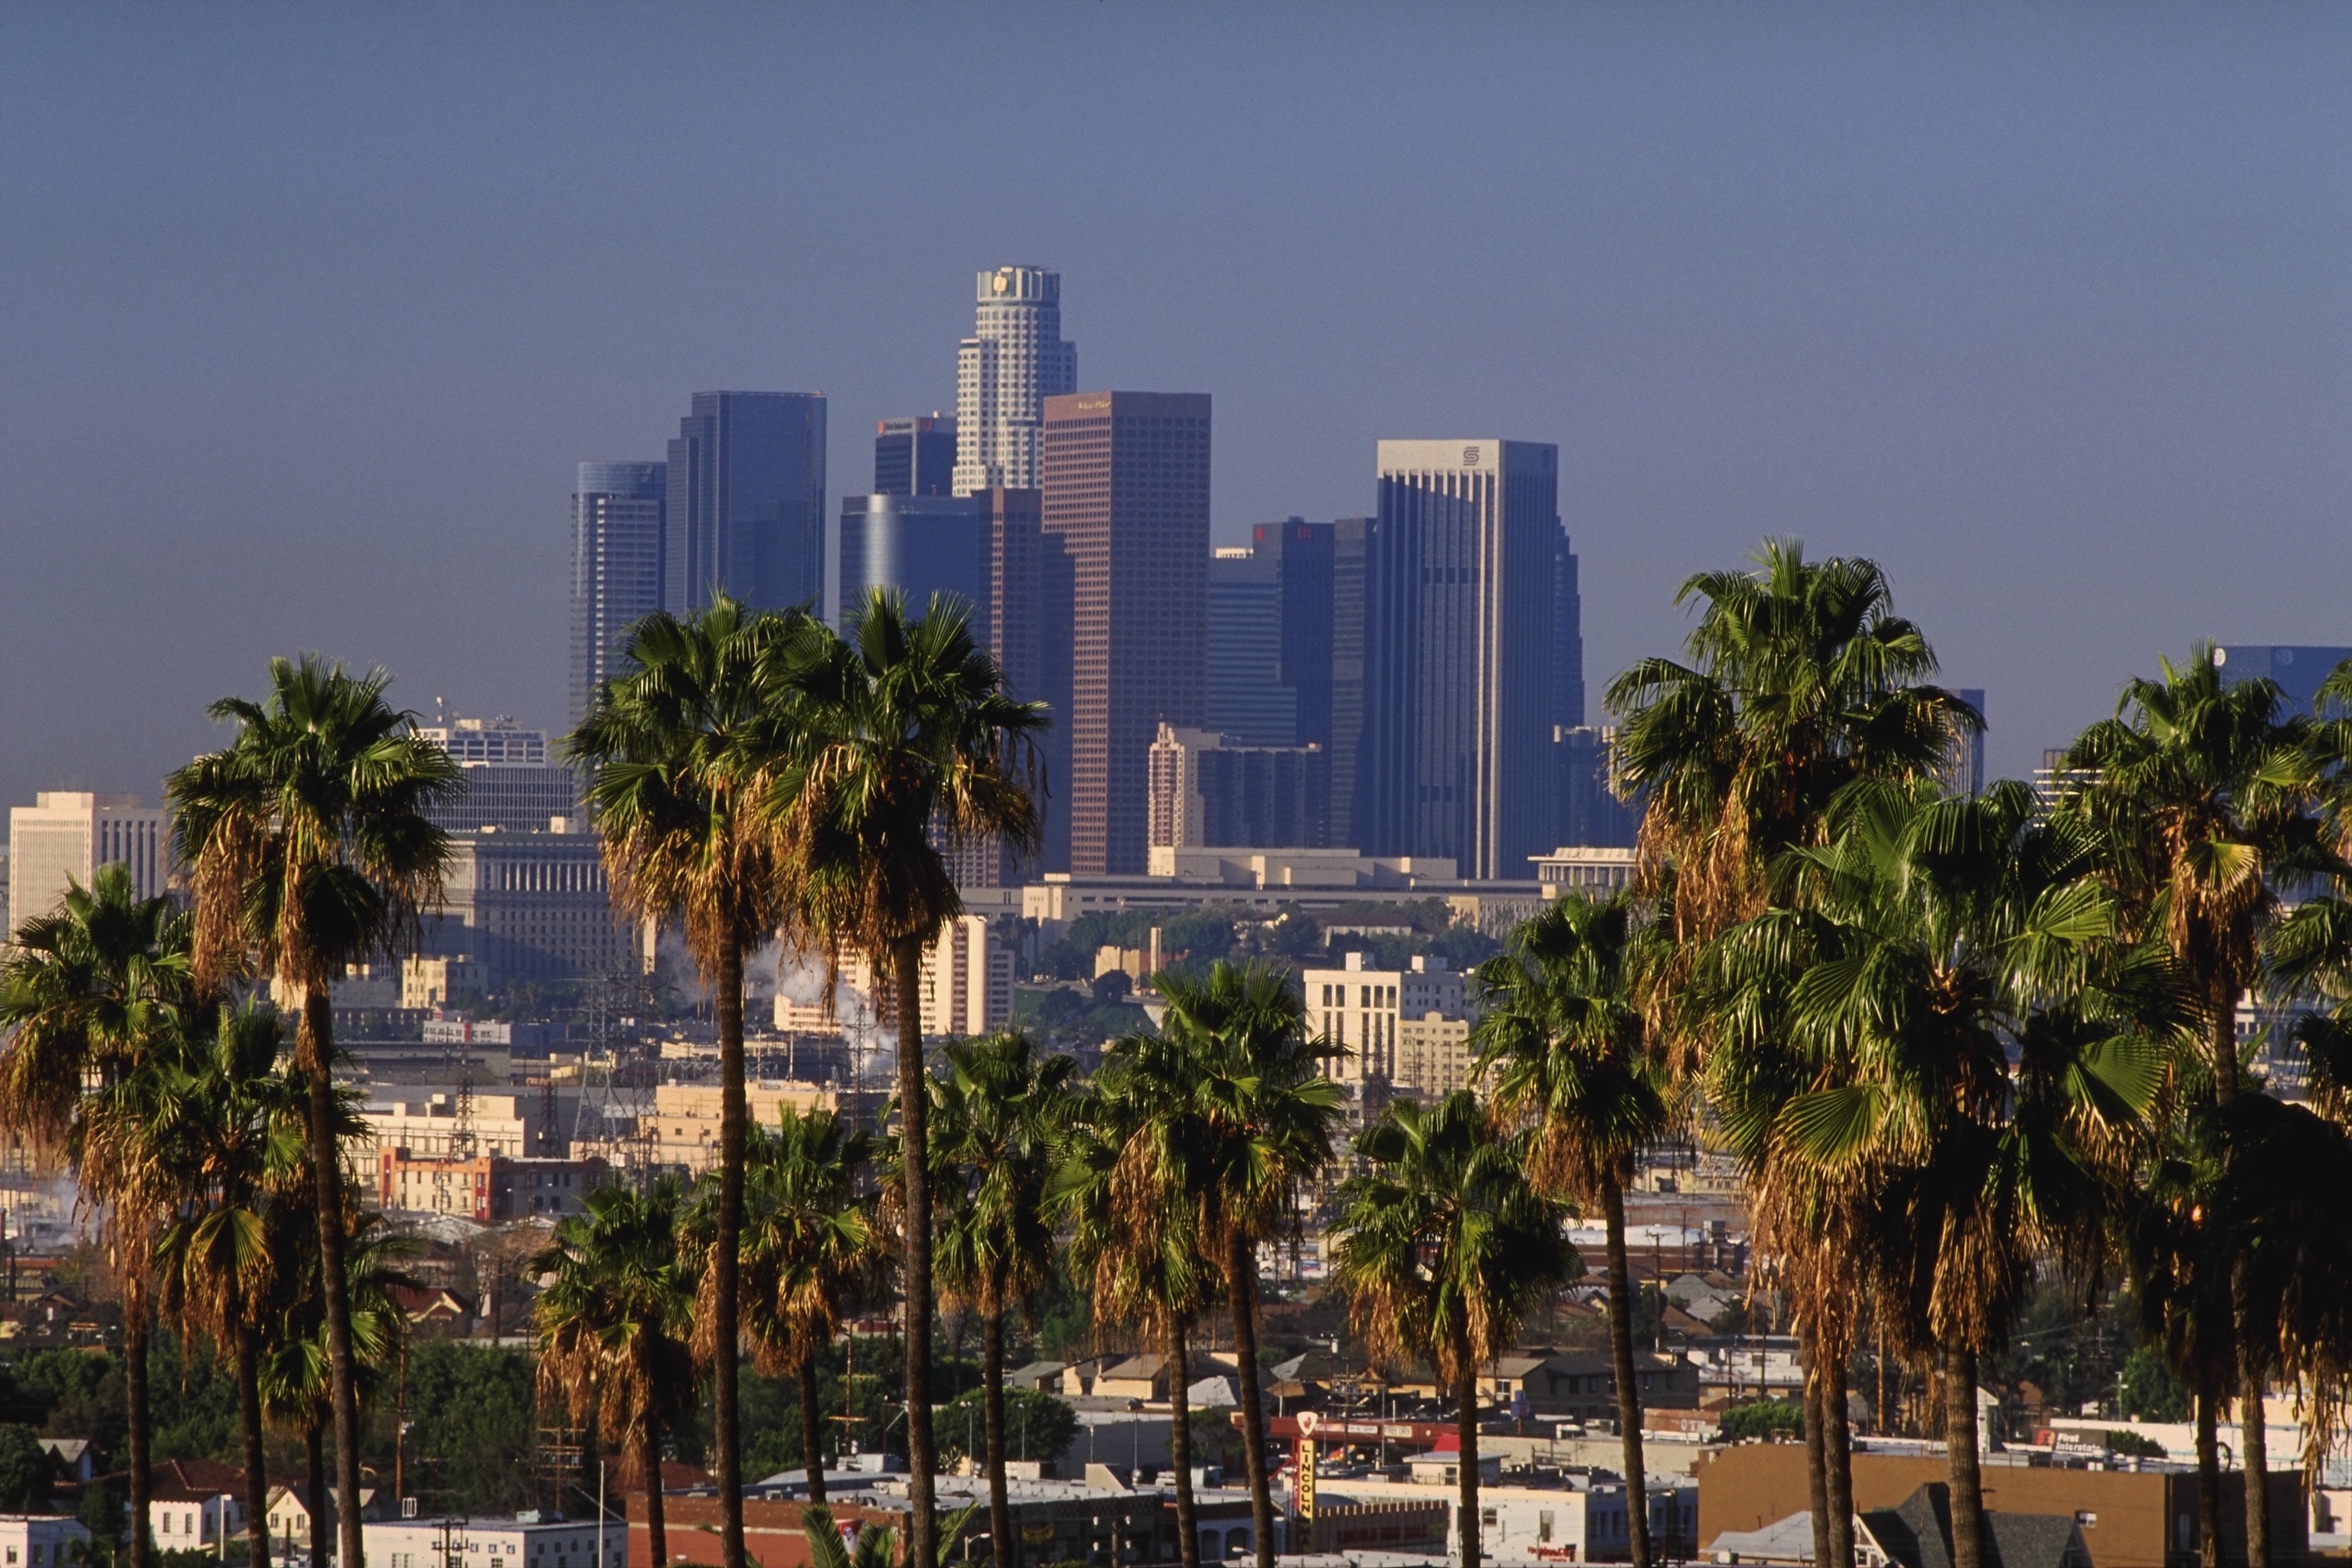 Los Angeles: The biggest city of California. 3080x2050 HD Wallpaper.